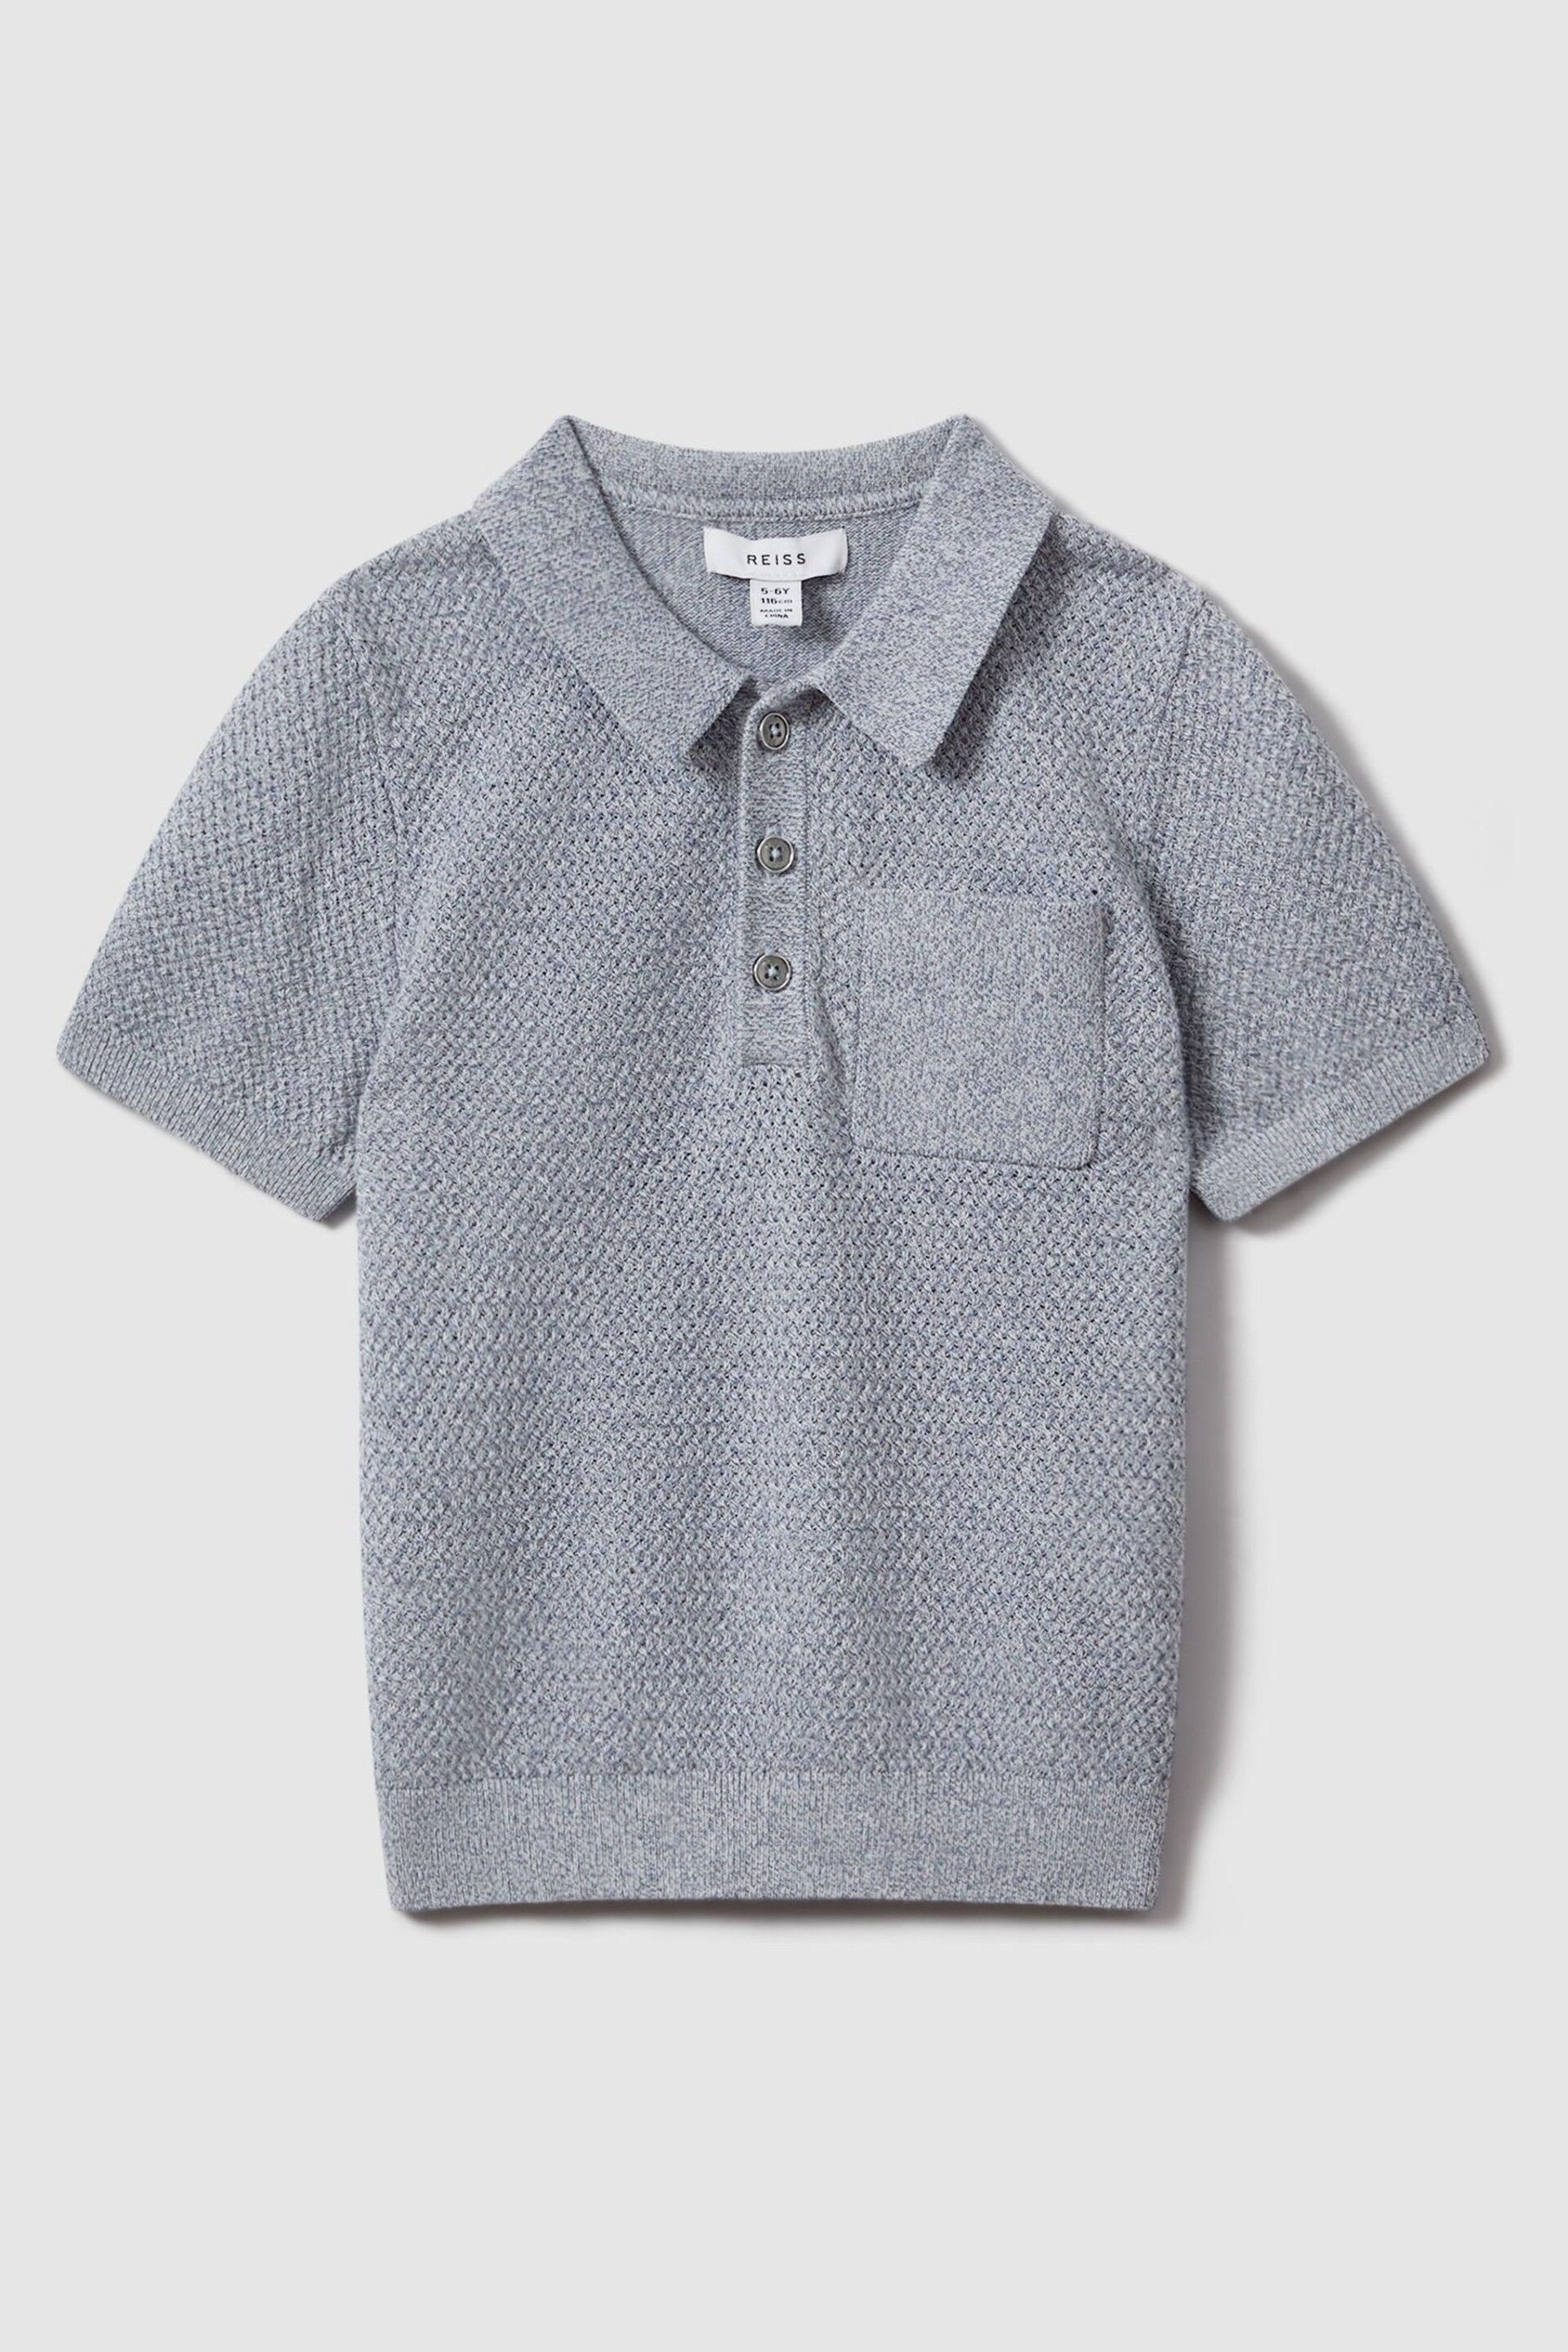 Reiss Blue Melange Demetri Teen Textured Cotton Polo Shirt - Image 1 of 4